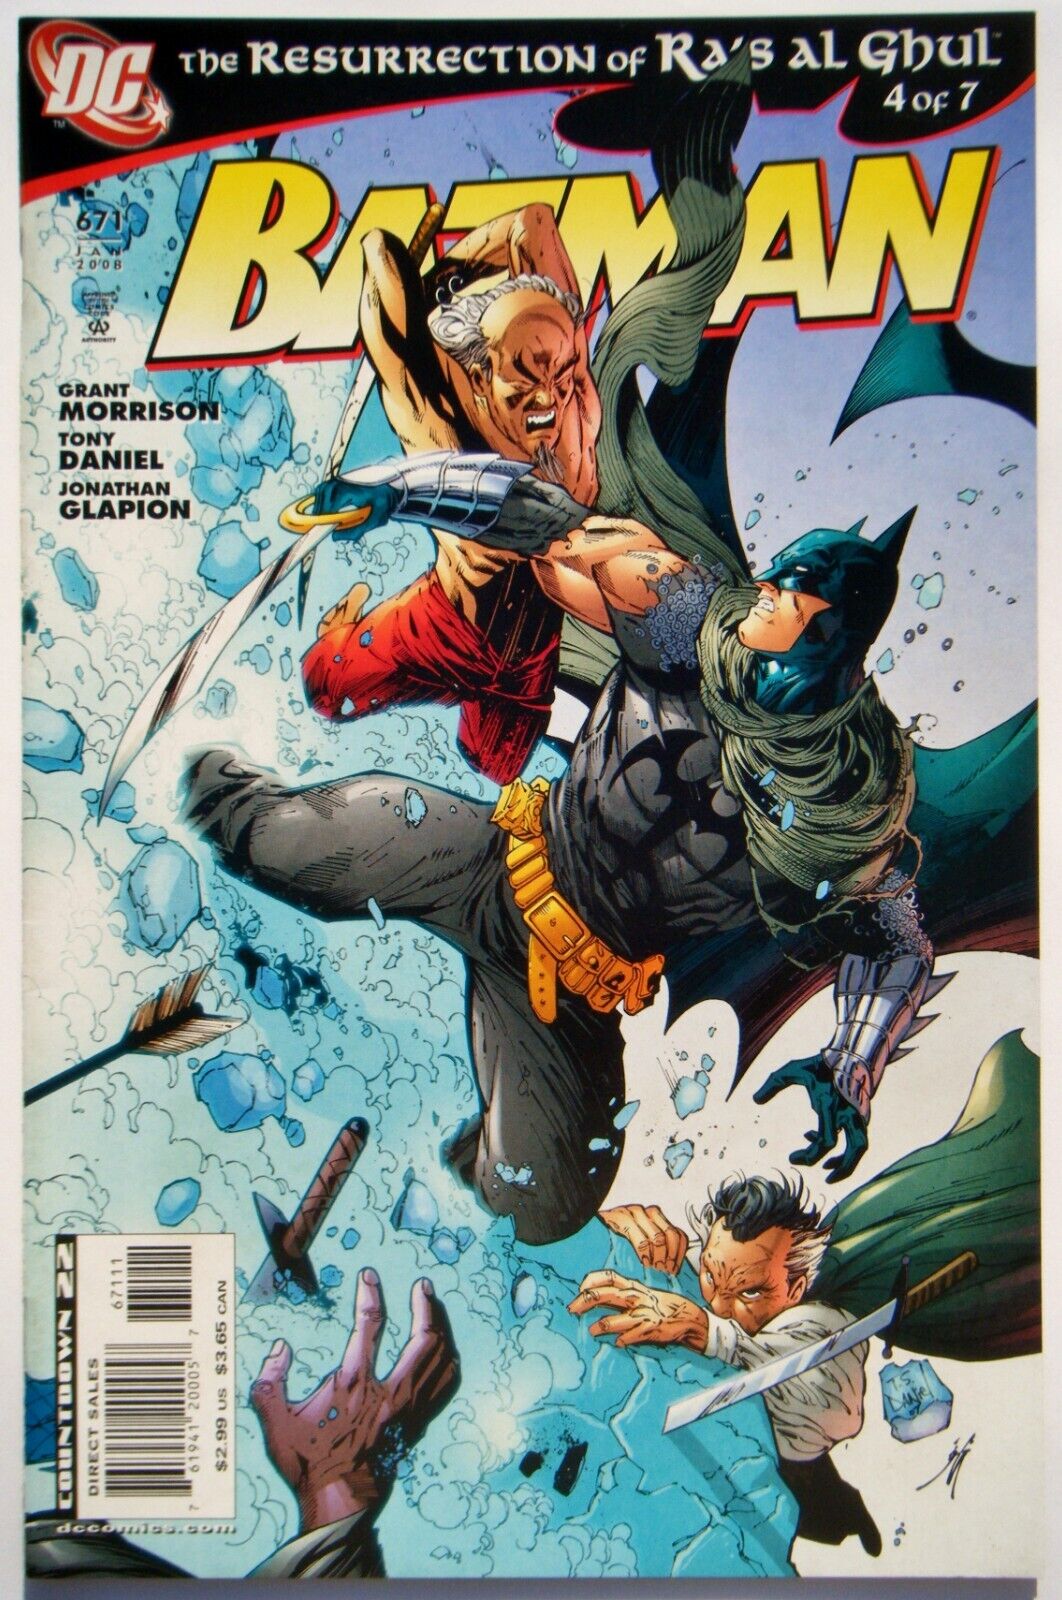 Batman #671 (Jan. 08') NM (9.4) Ra's al Ghul & the League of Assassins/ Morrison